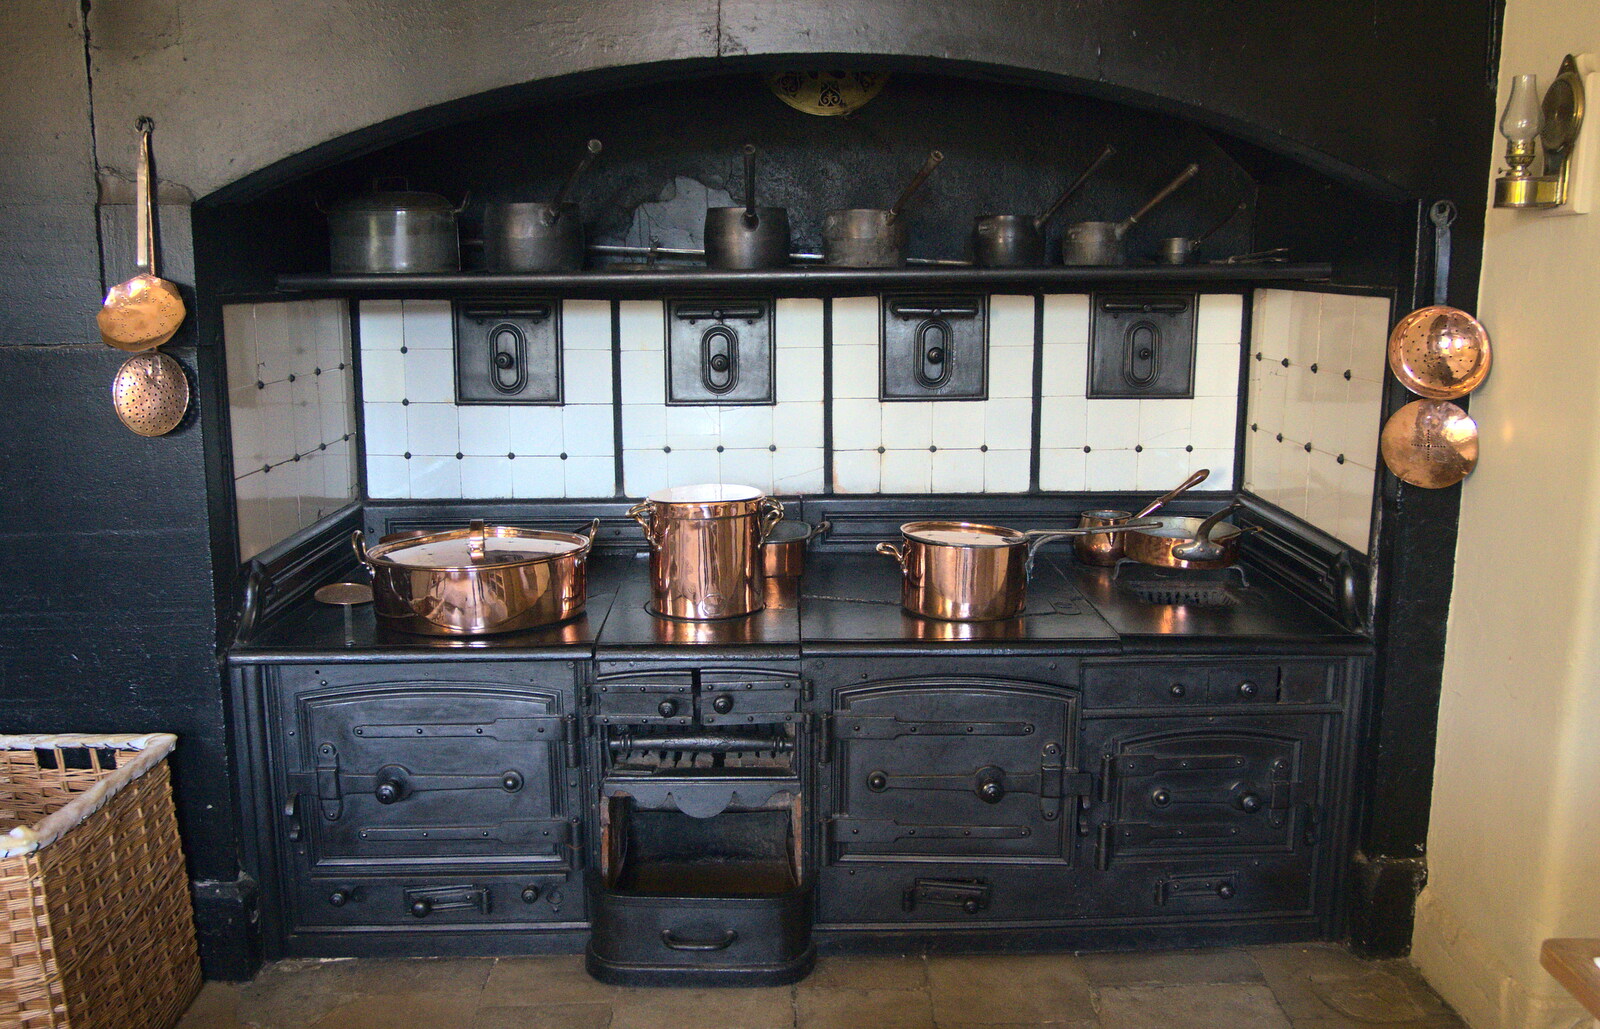 An impressive range cooker from A Trip to Audley End House, Saffron Walden, Essex - 16th April 2014